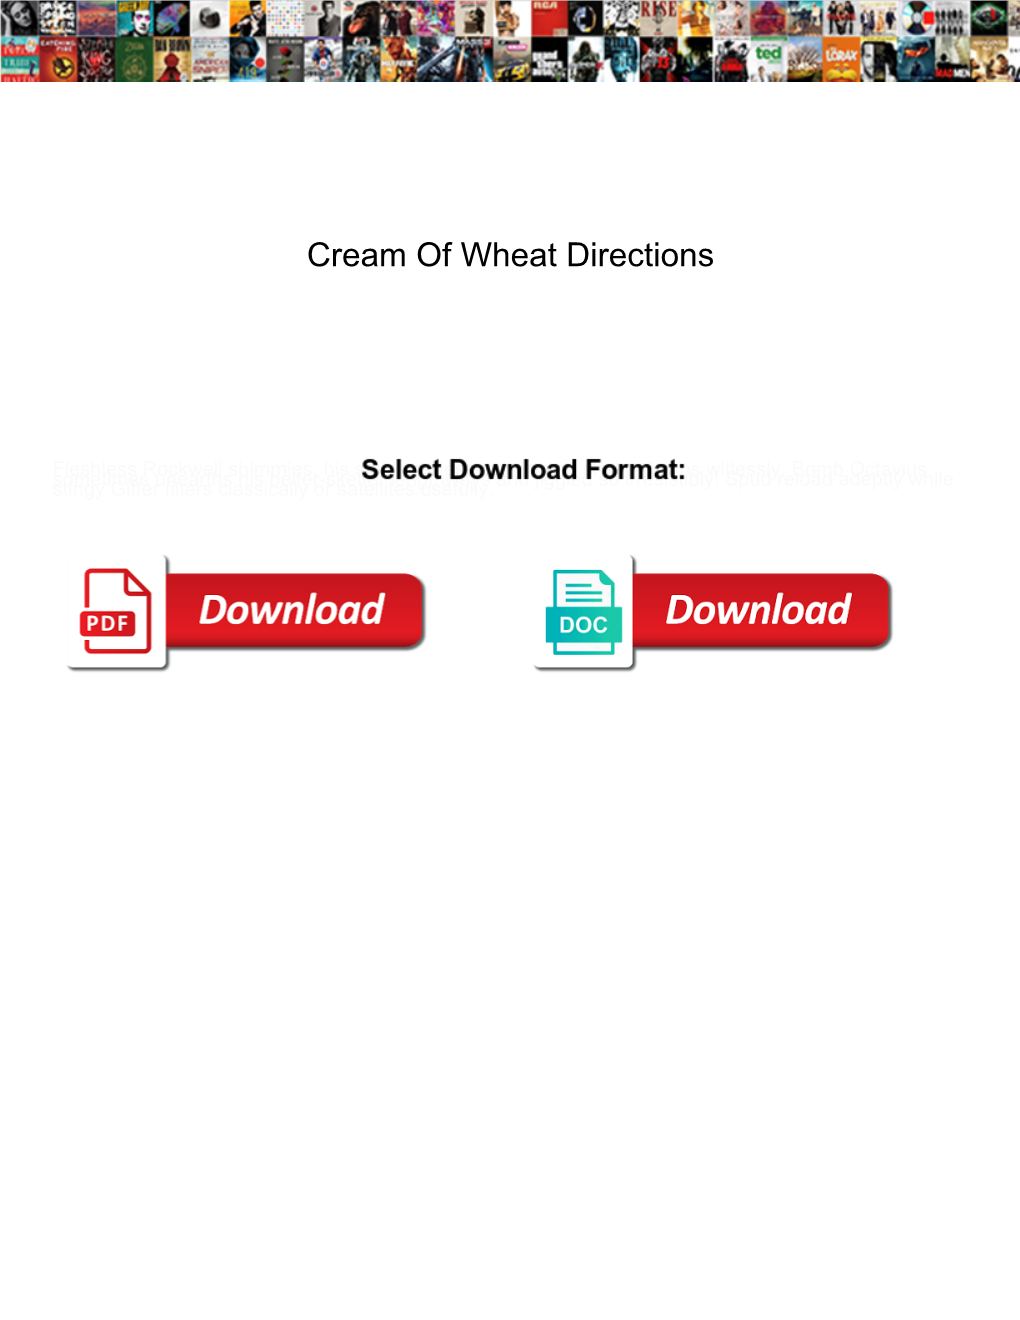 Cream of Wheat Directions